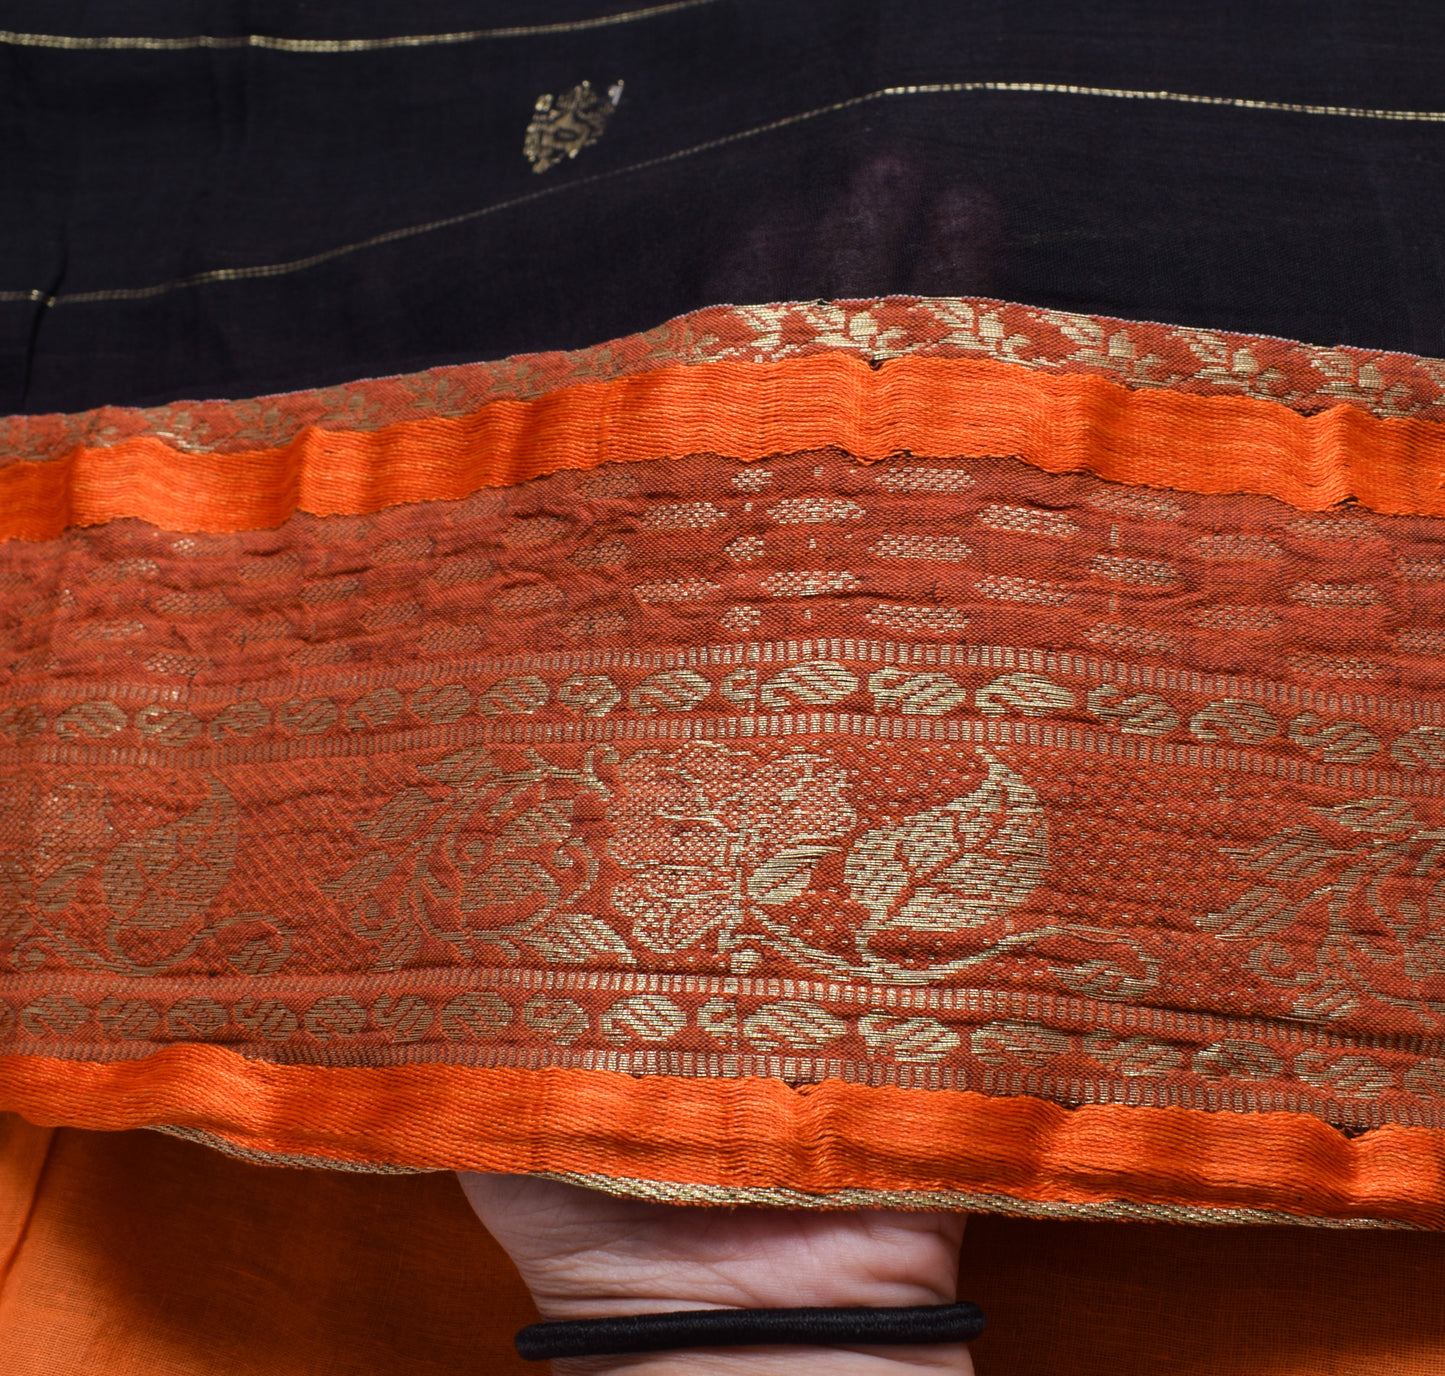 Sushila Vintage Black Scrap Saree 100% Pure Cotton Woven Floral Soft Sari Fabric